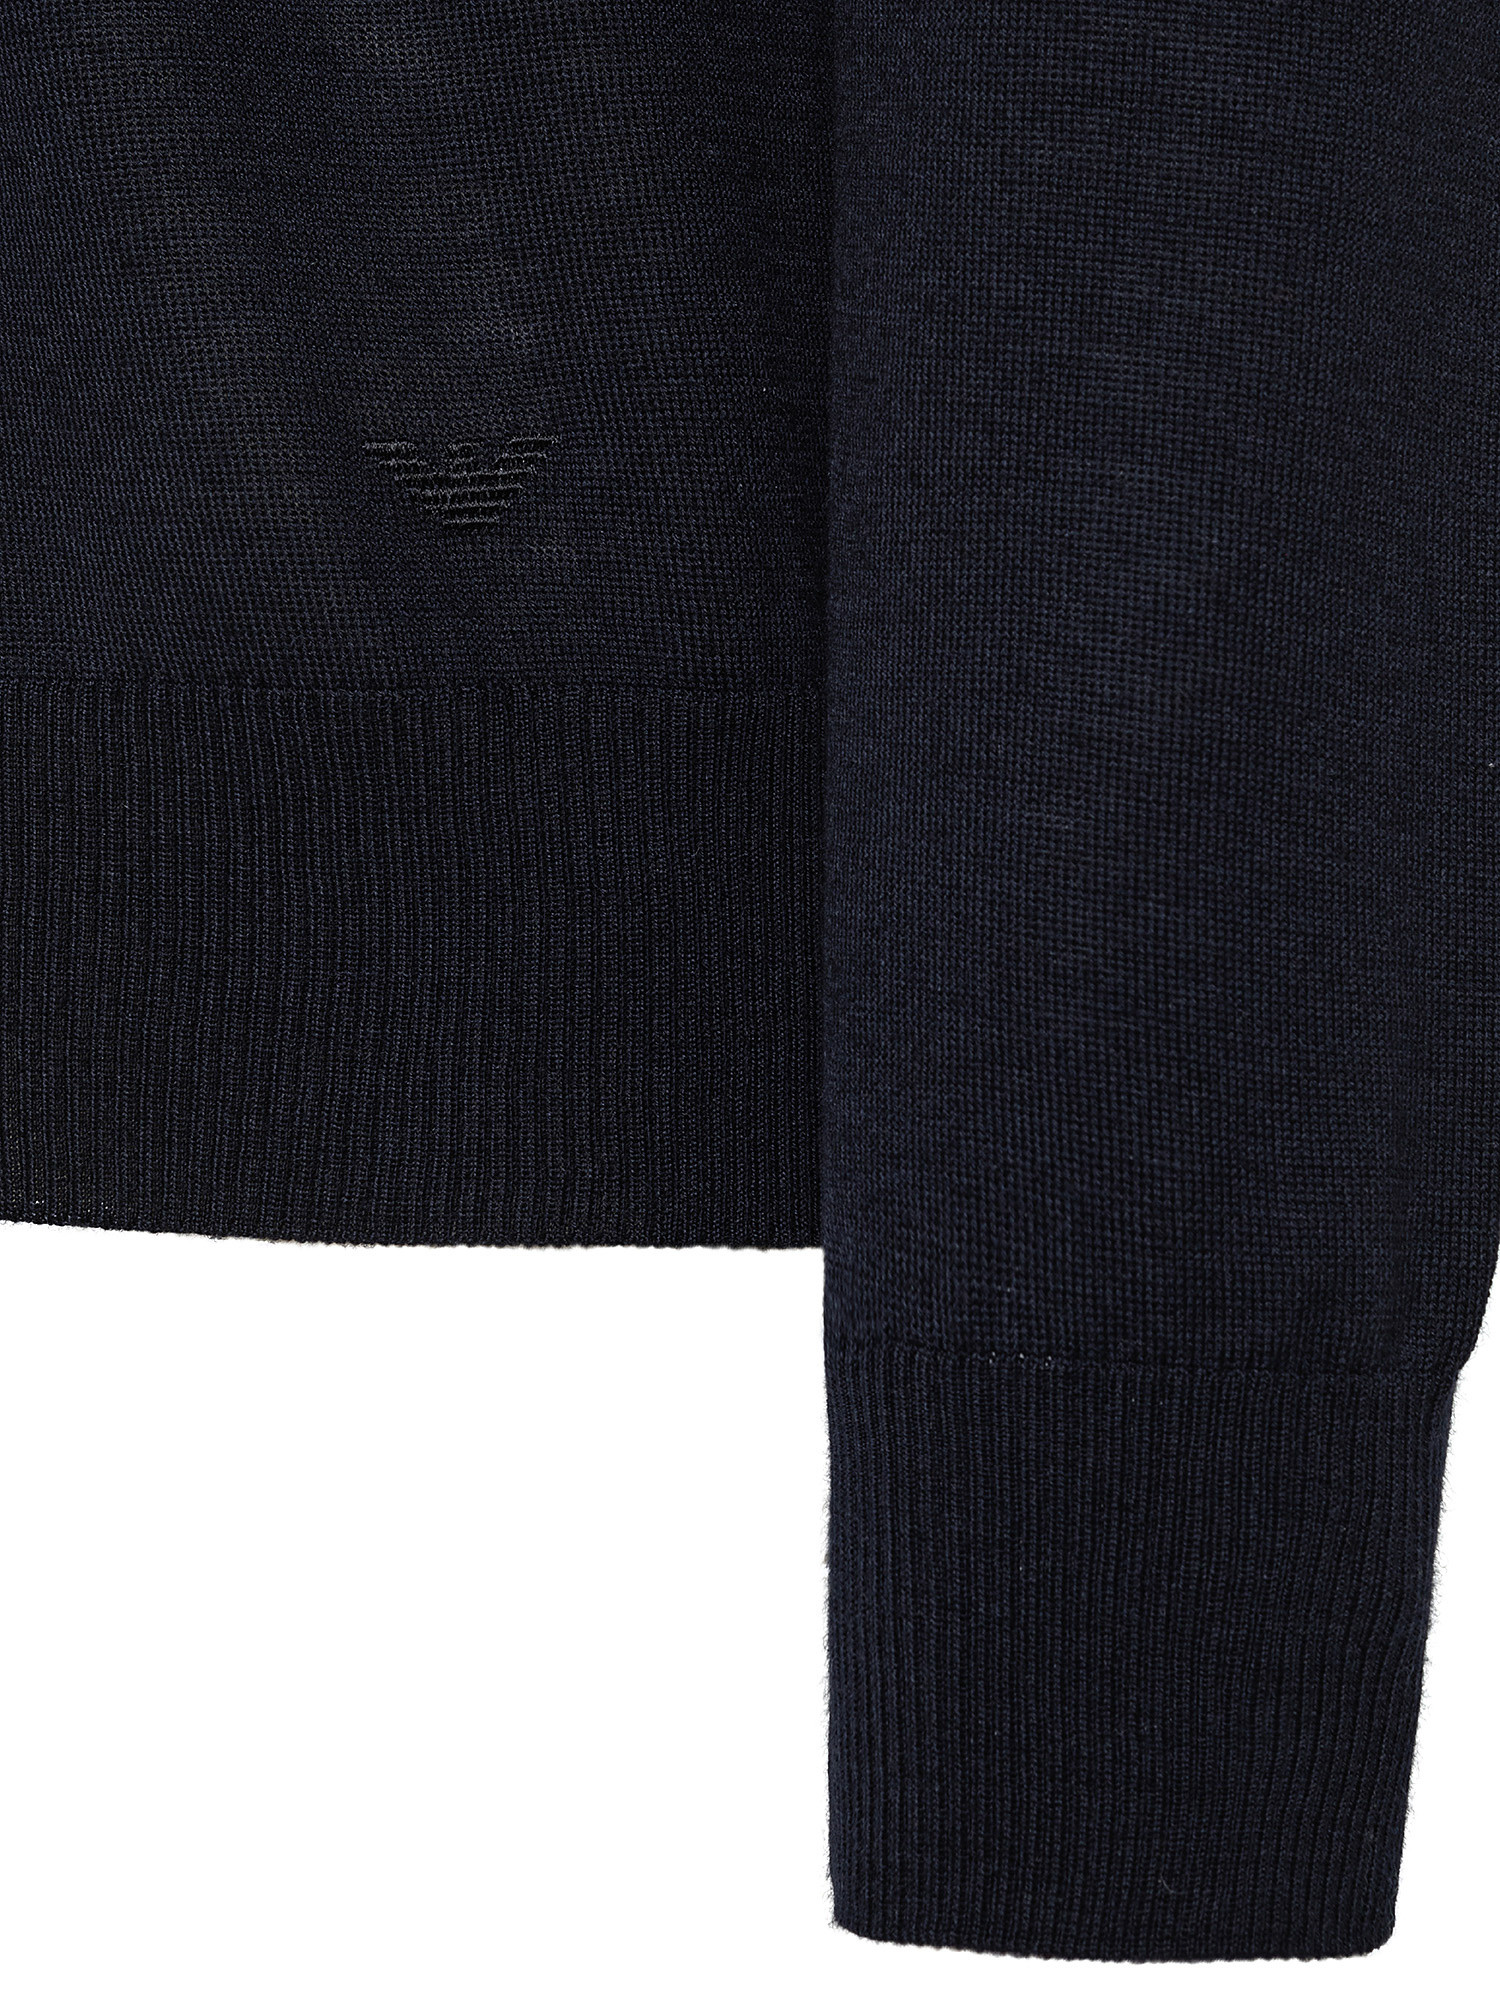 Crewneck sweater in wool, Dark Blue, large image number 2